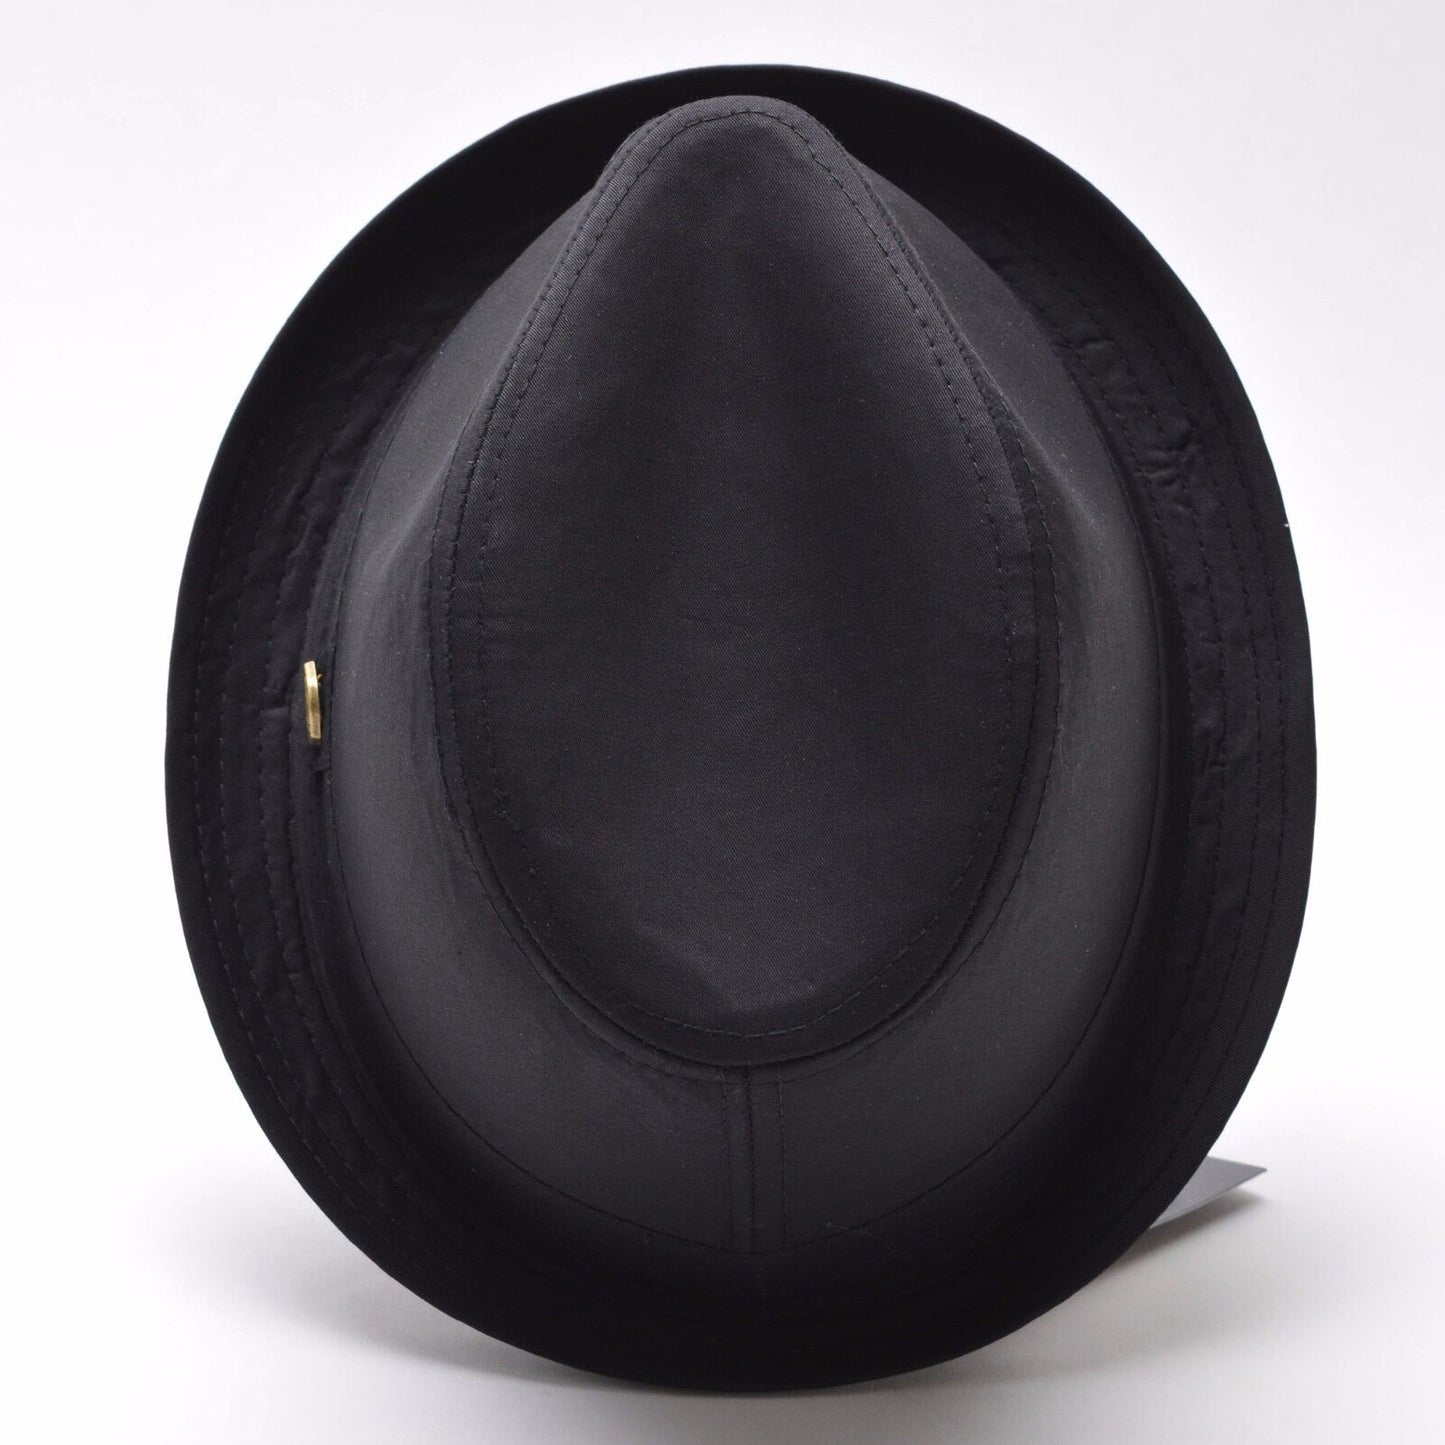 Fedora Hat Cotton Roll-Up Band Trilby Cuban Caps Black White Grey Khaki – PMT111